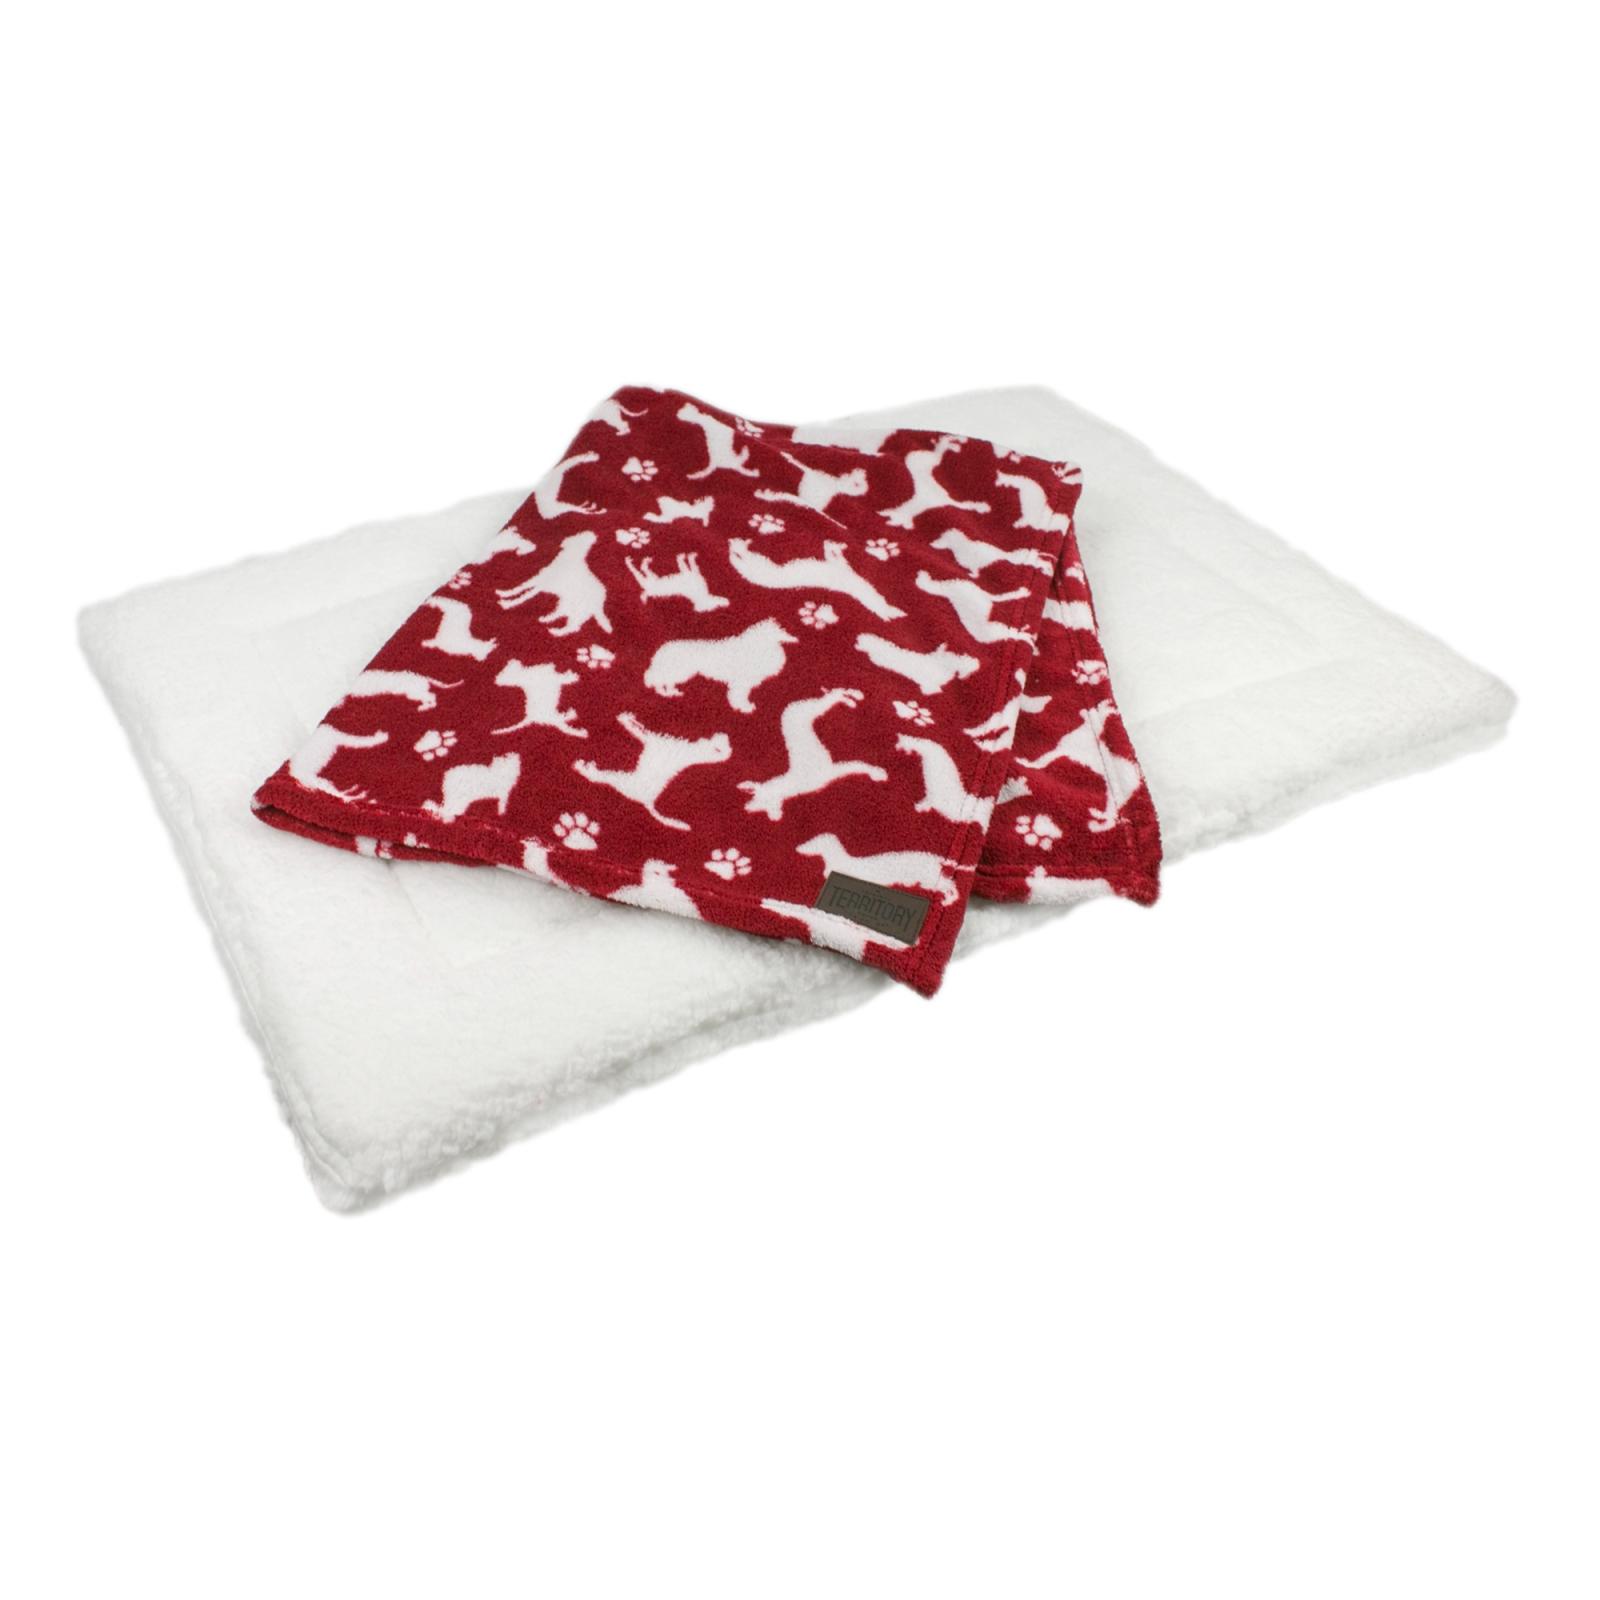 Original Territory Pet Bed and Red Blanket Bundle